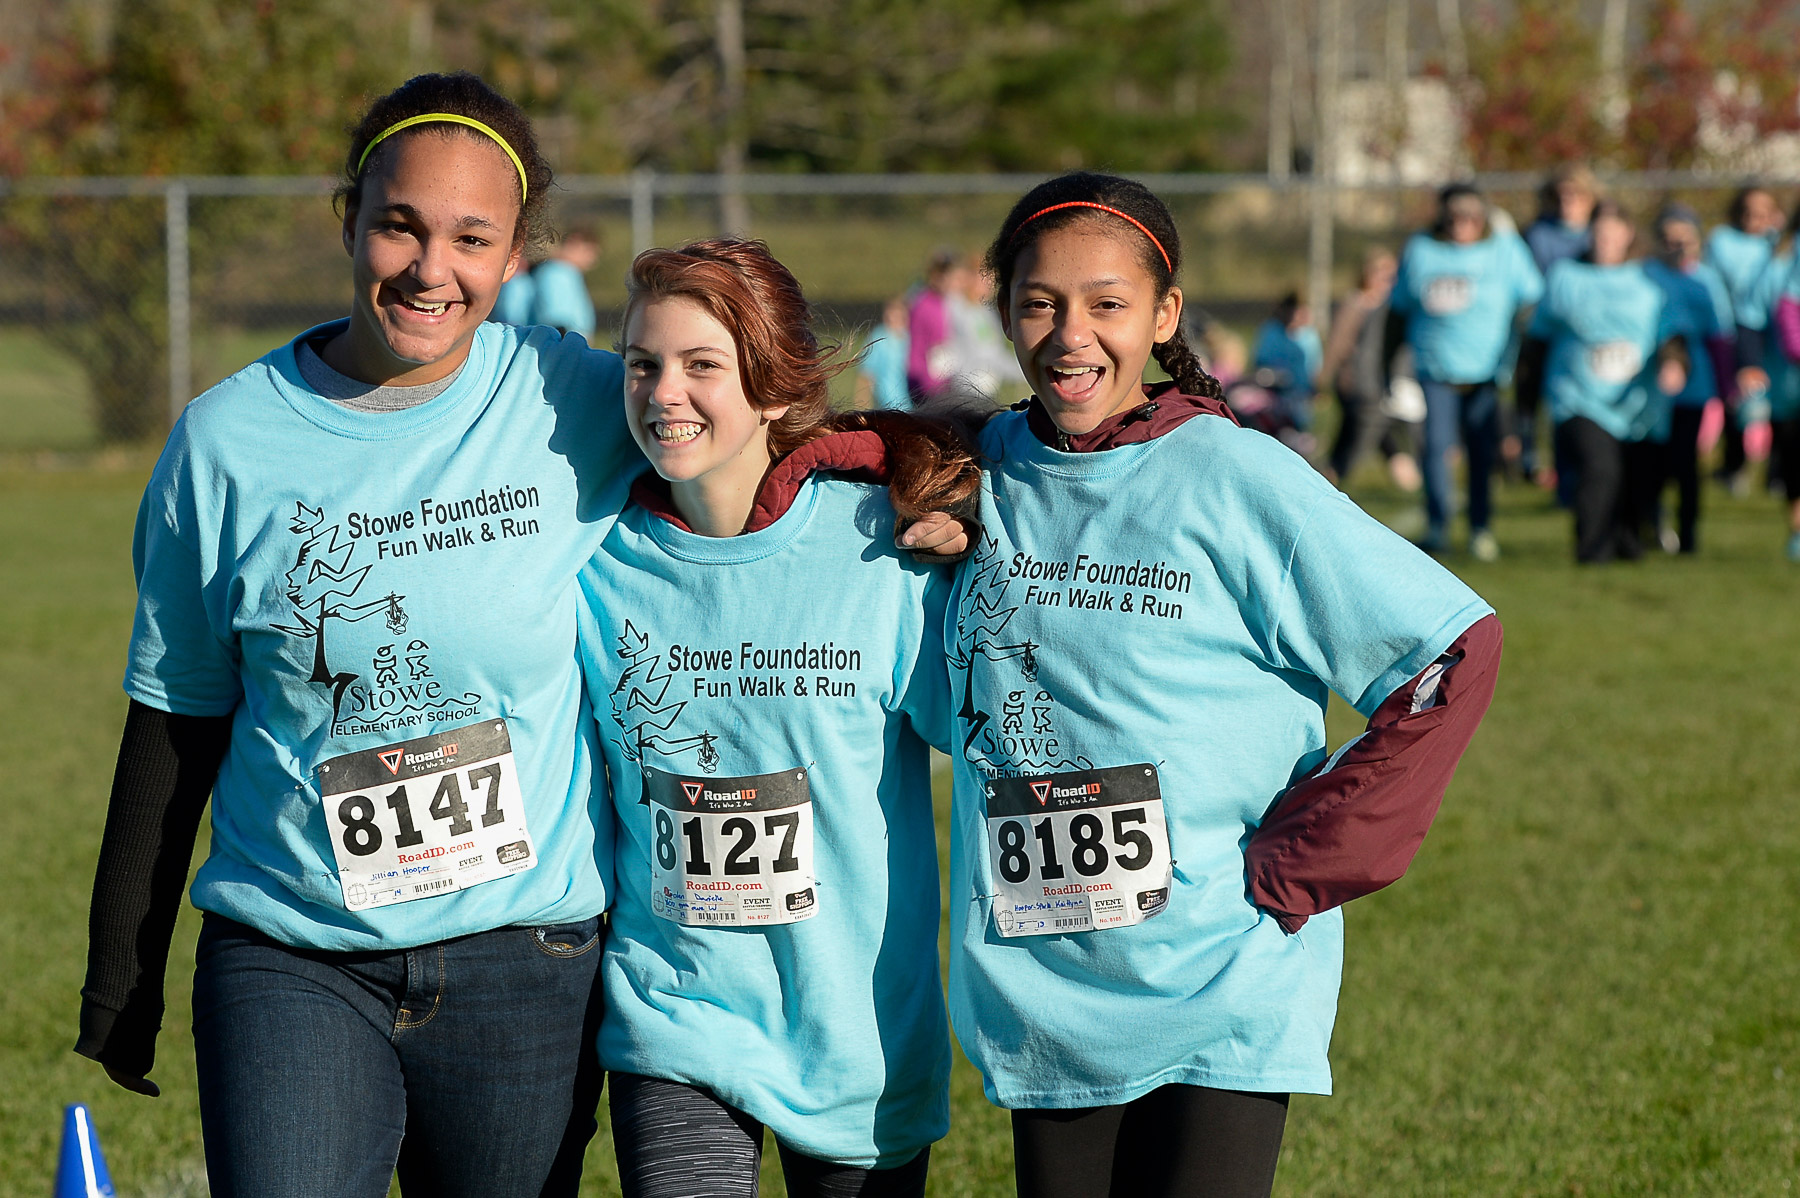 Three girls smile while wearing blue shirts that say Stowe Foundation Fun Walk & Run